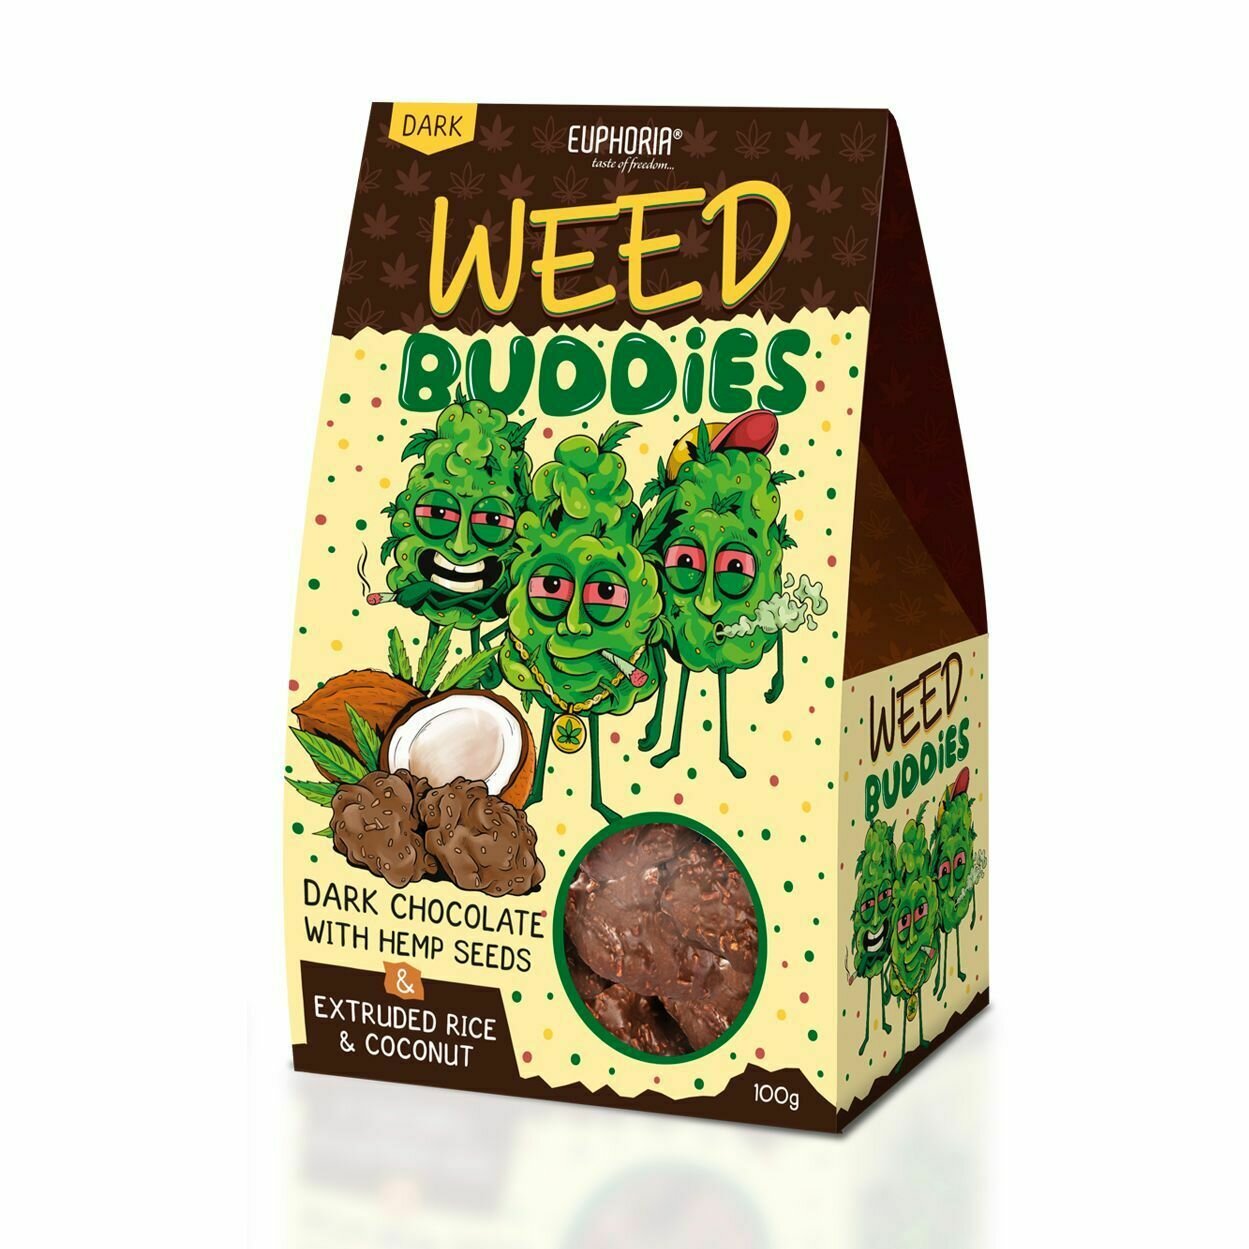 "Euphoria" Weed Buddies Dark (100g)